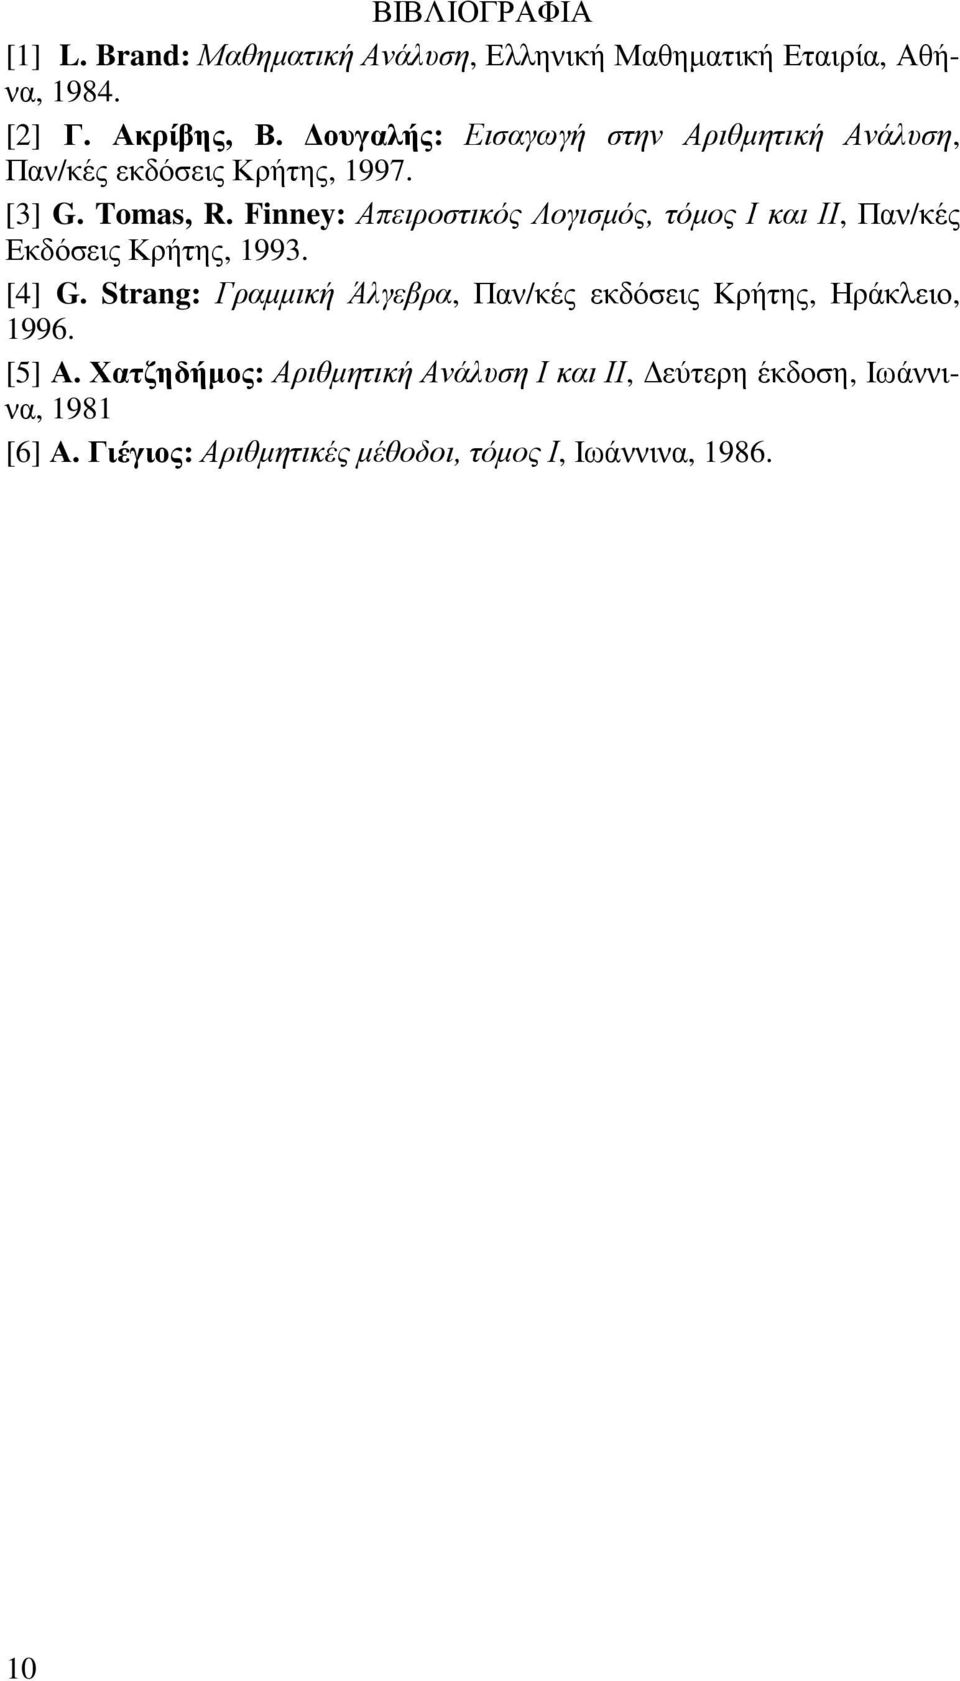 Fey: Απειροστικός Λογισµός, τόµος Ι και ΙΙ, Παν/κές Εκδόσεις Κρήτης, 993. [4] G.